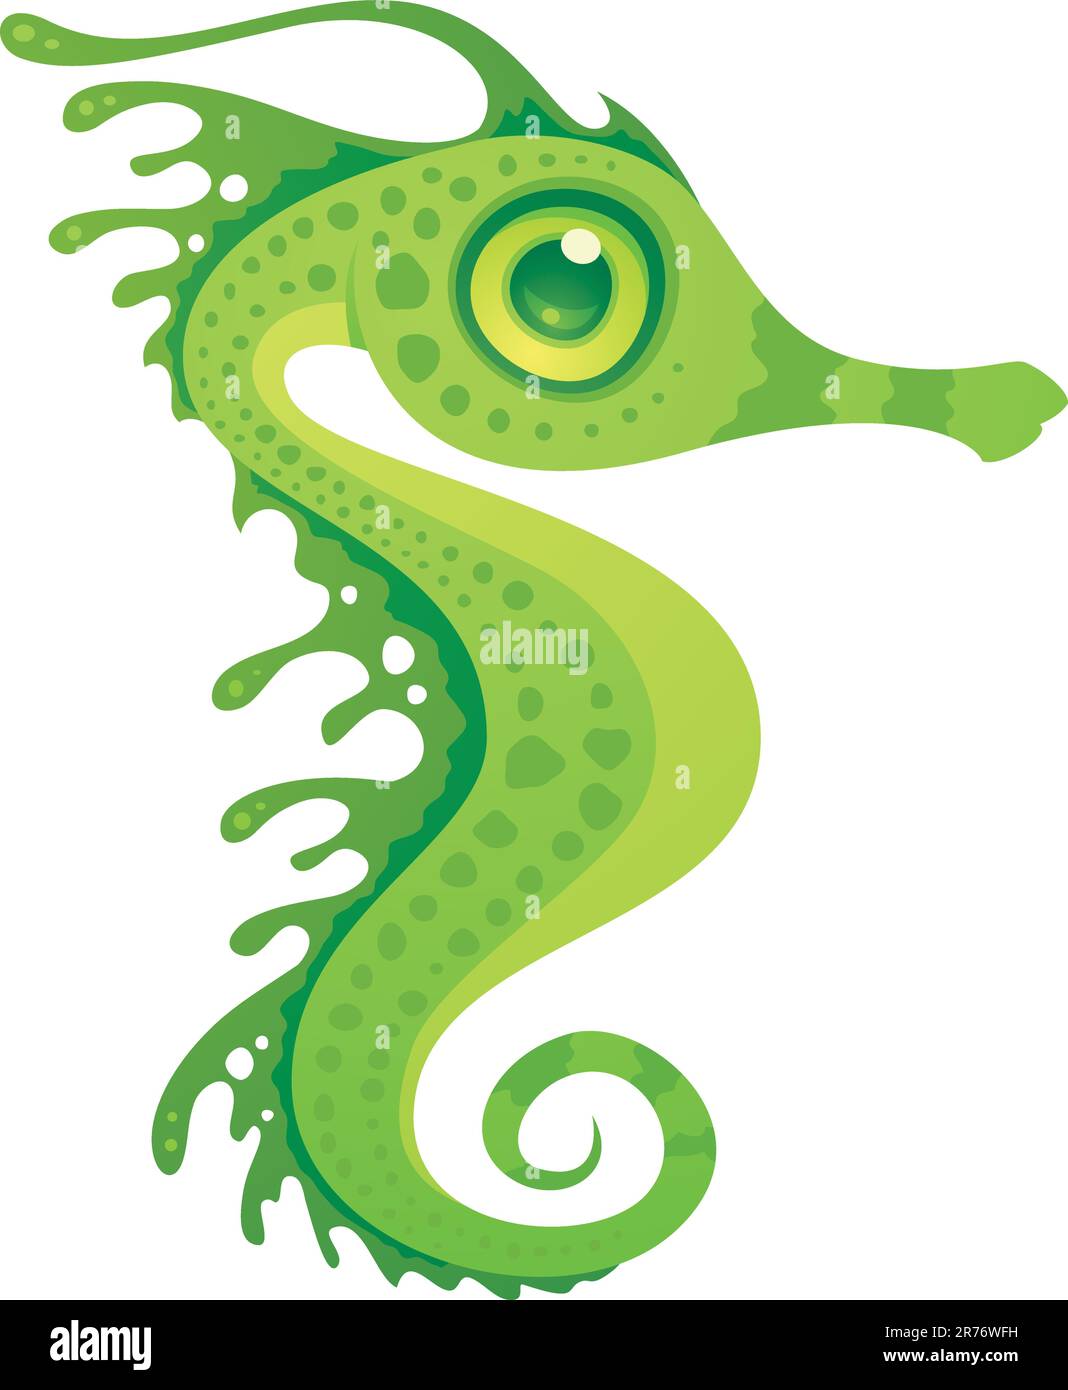 Vector cartoon illustration of a green leafy sea dragon seahorse. Stock Vector